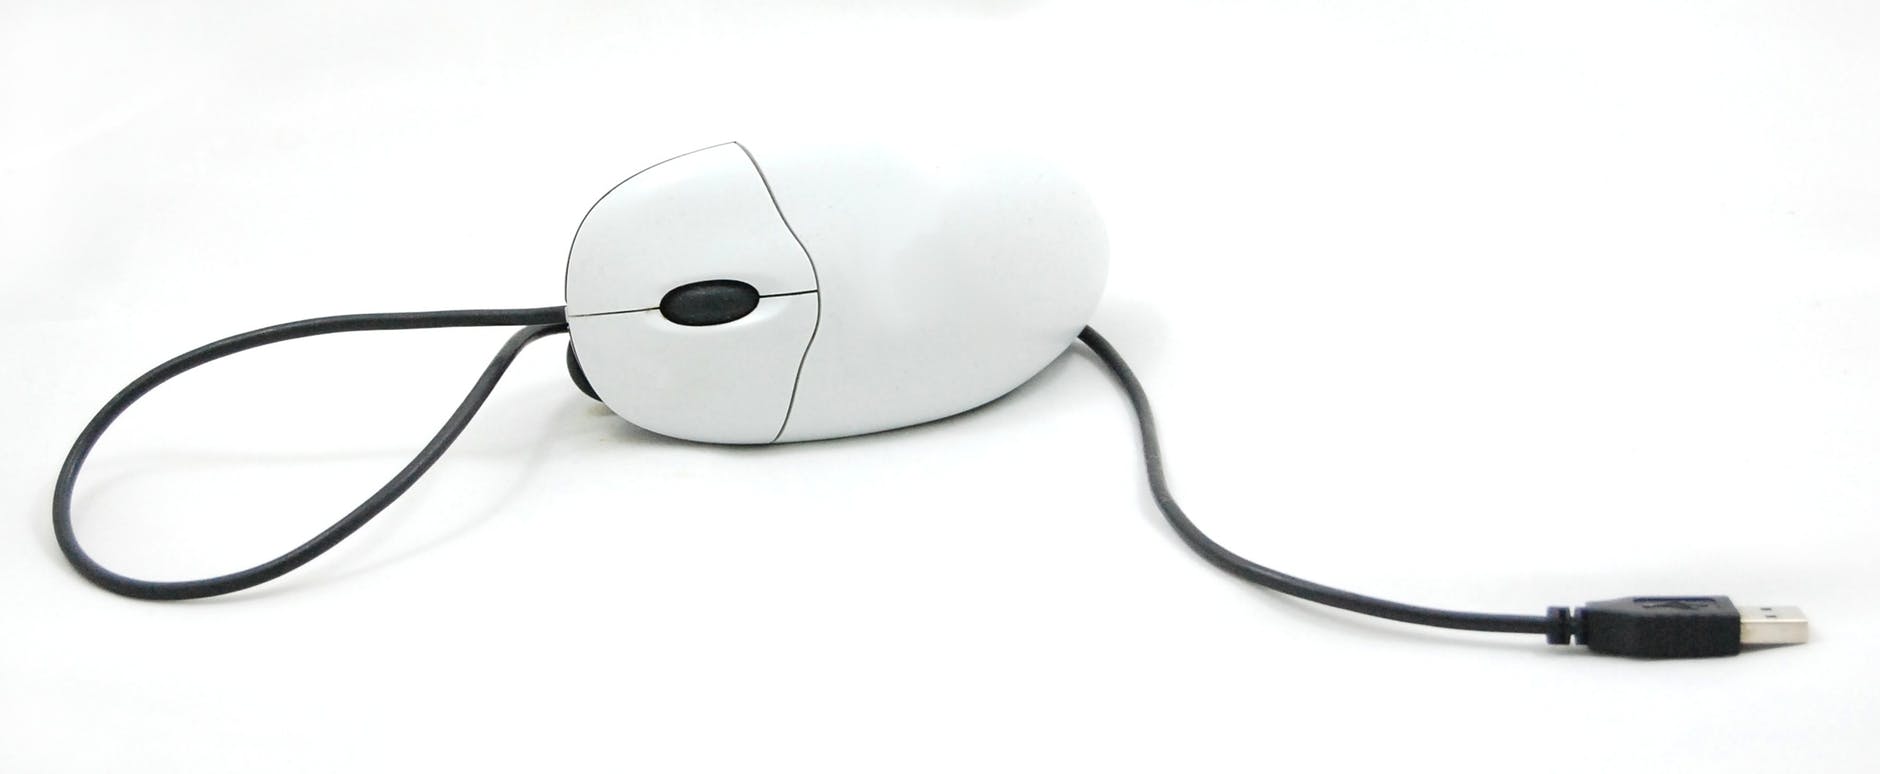 best computer mouse under $100